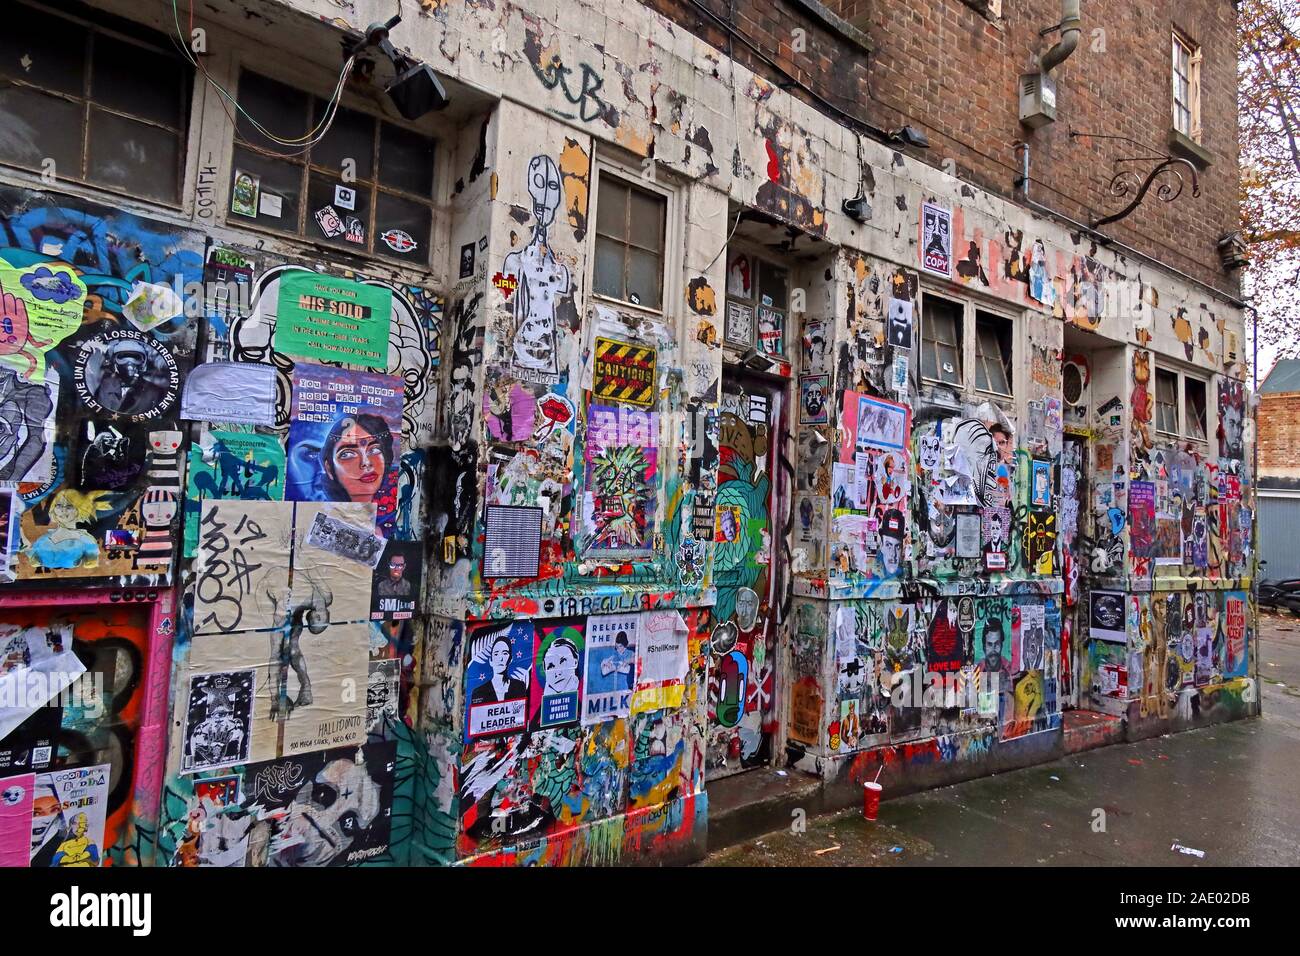 Graffiti and posters, stencil art,off Brick lane,East End, London,England,UK, E1 6QL Stock Photo